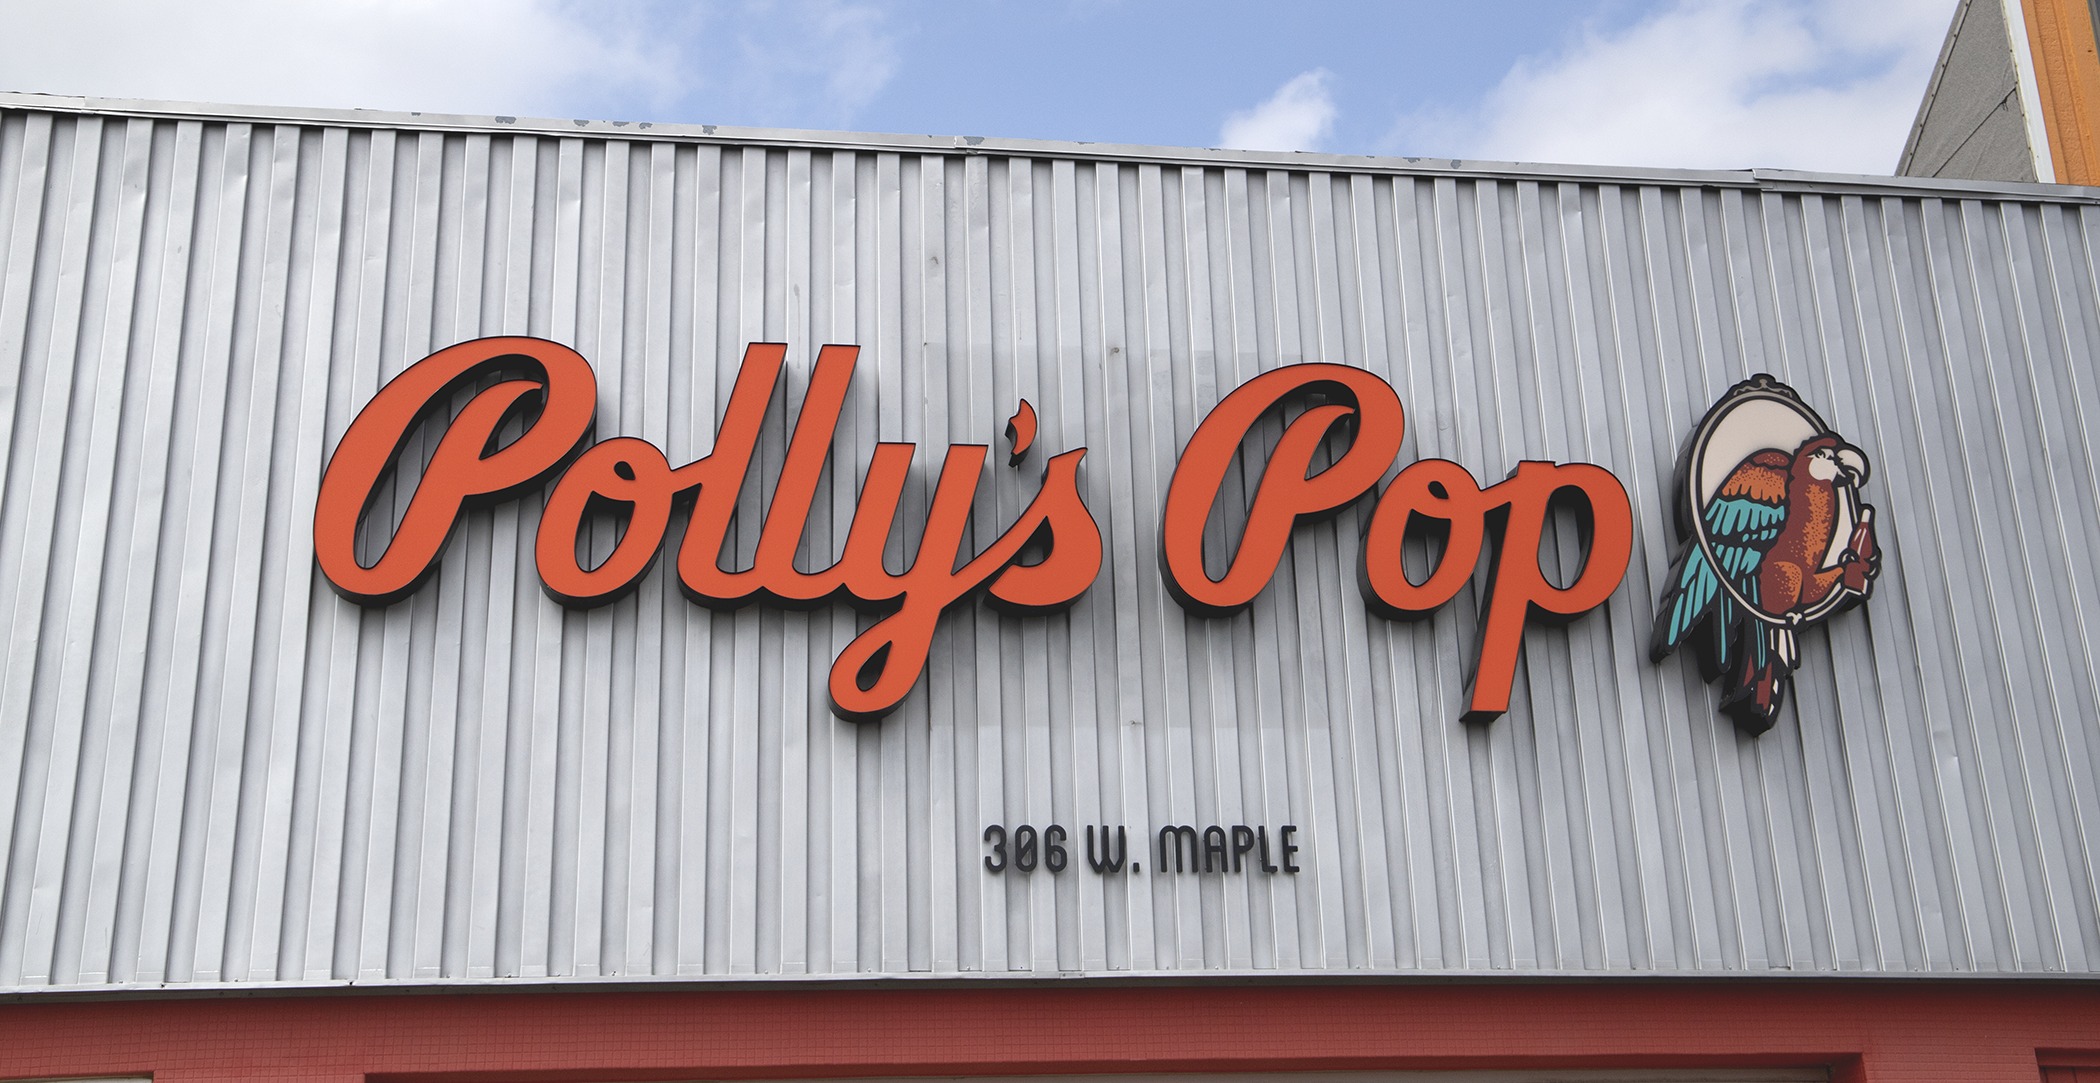 Orange logo of Polly's Pop on their storefront